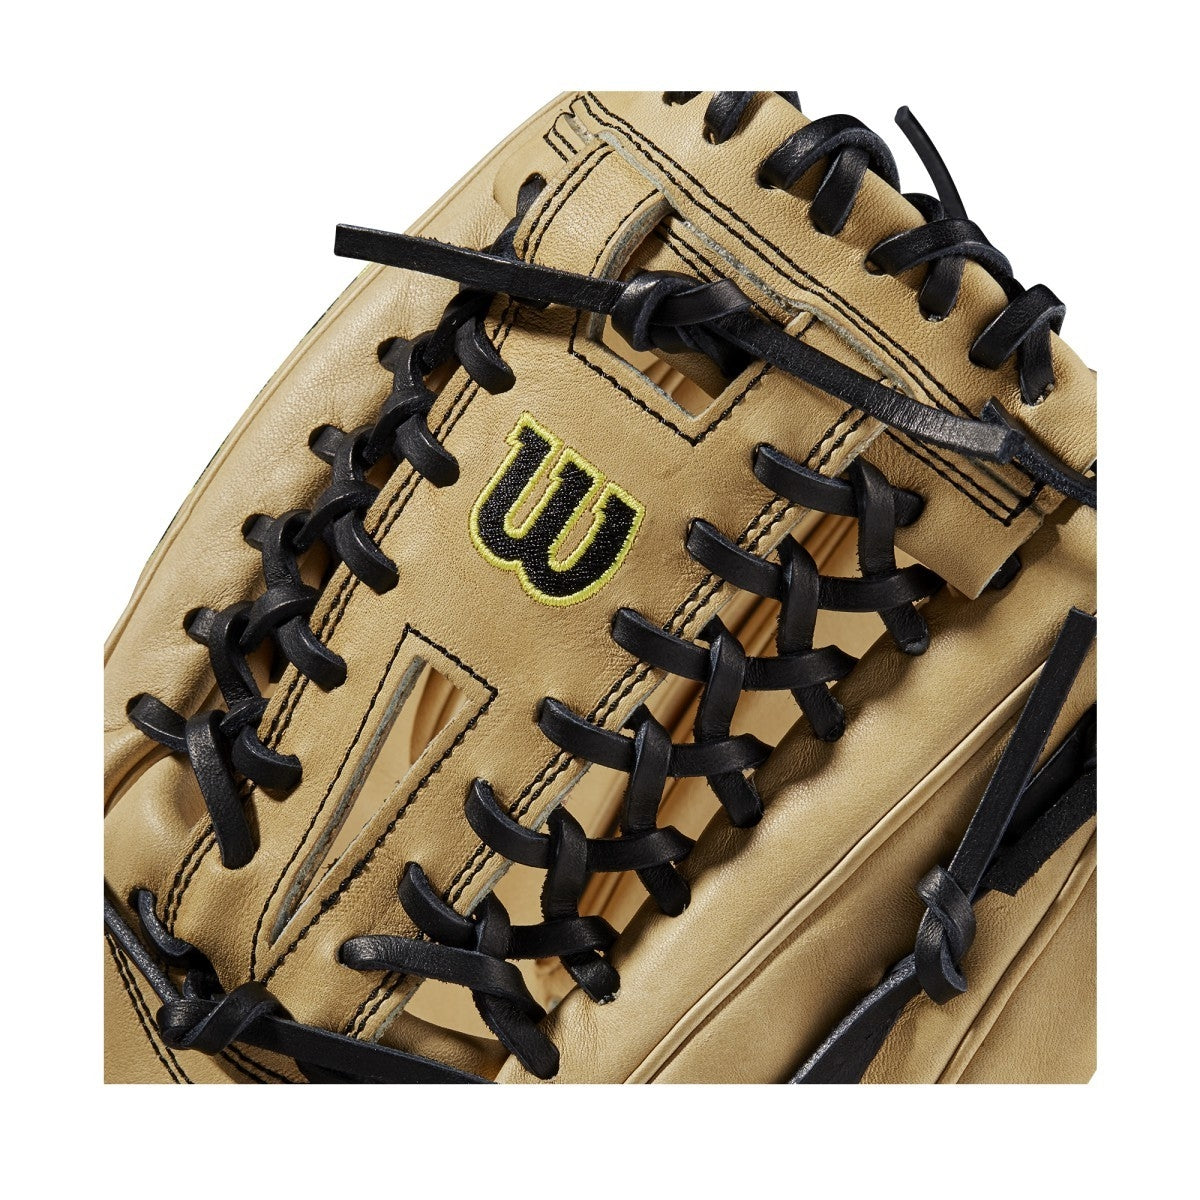 Wilson A2000 2021 A12 12" Pitcher/Outfield Glove